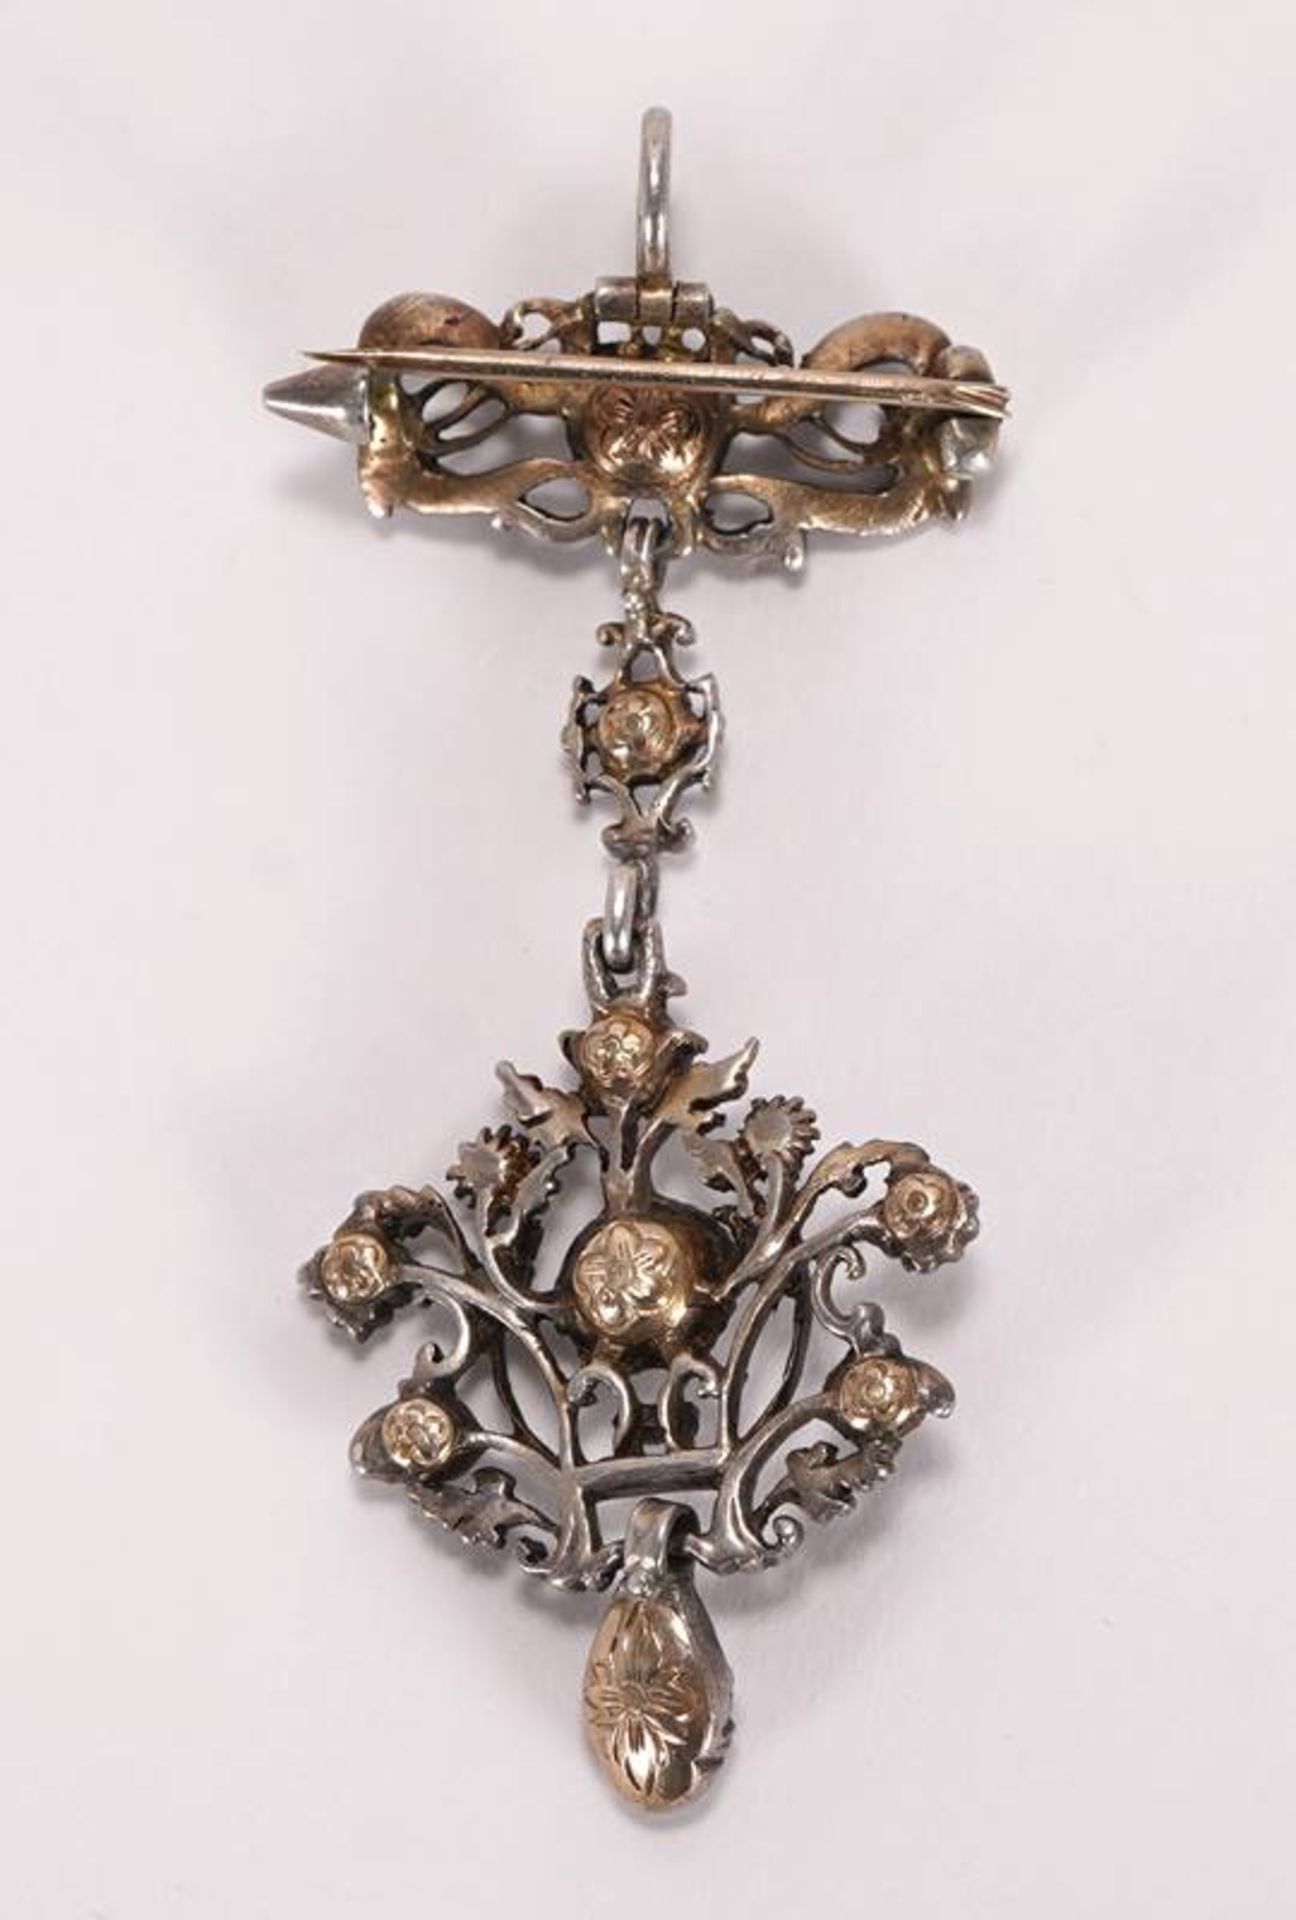 Baroque pendant - Image 2 of 2